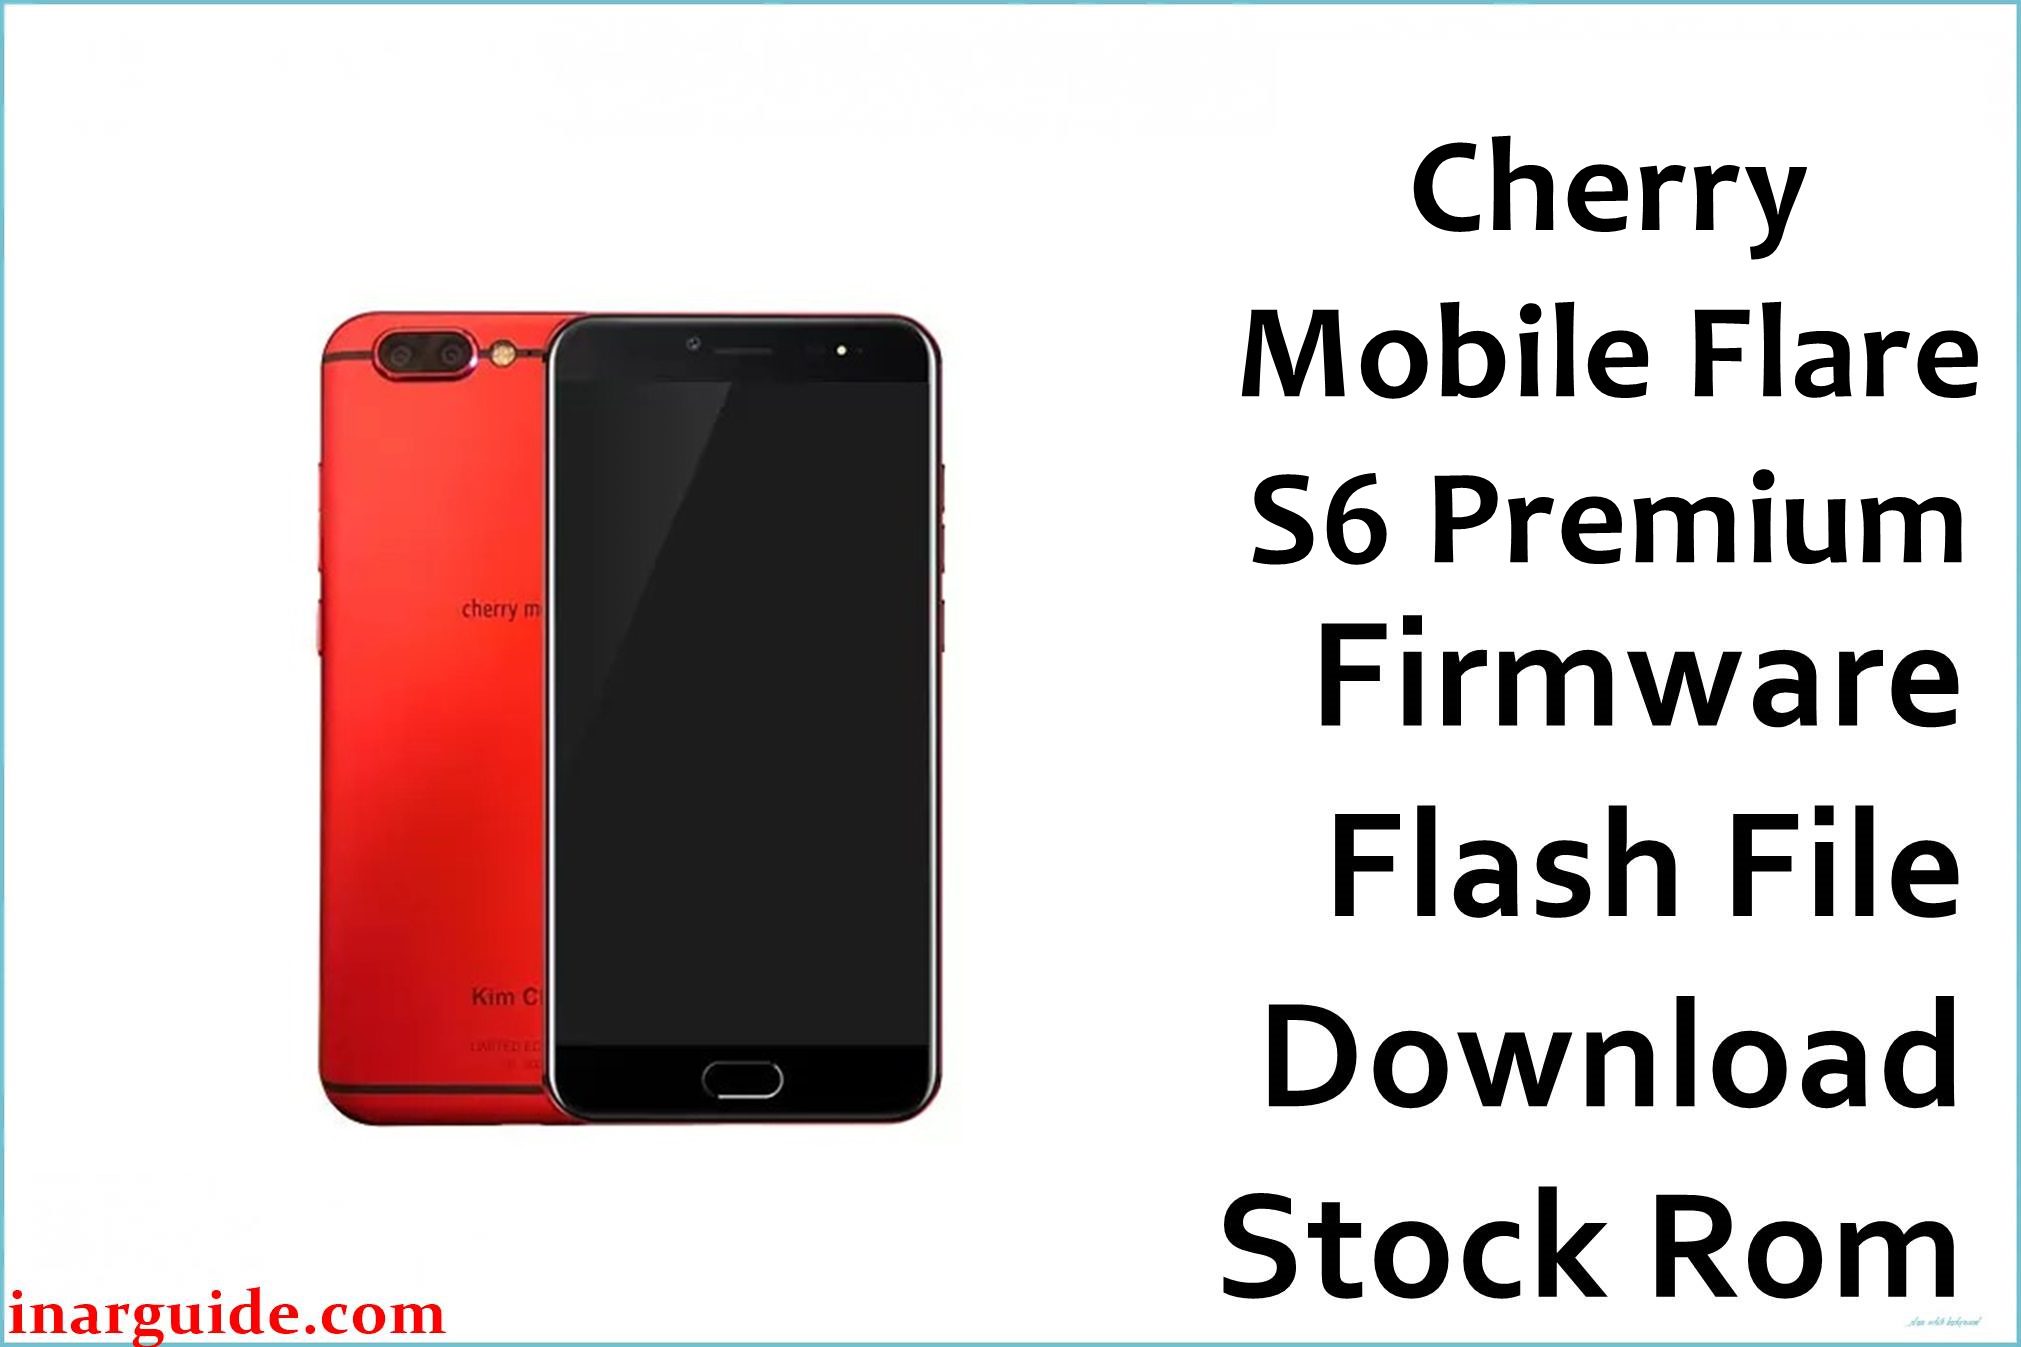 Cherry Mobile Flare S6 Premium